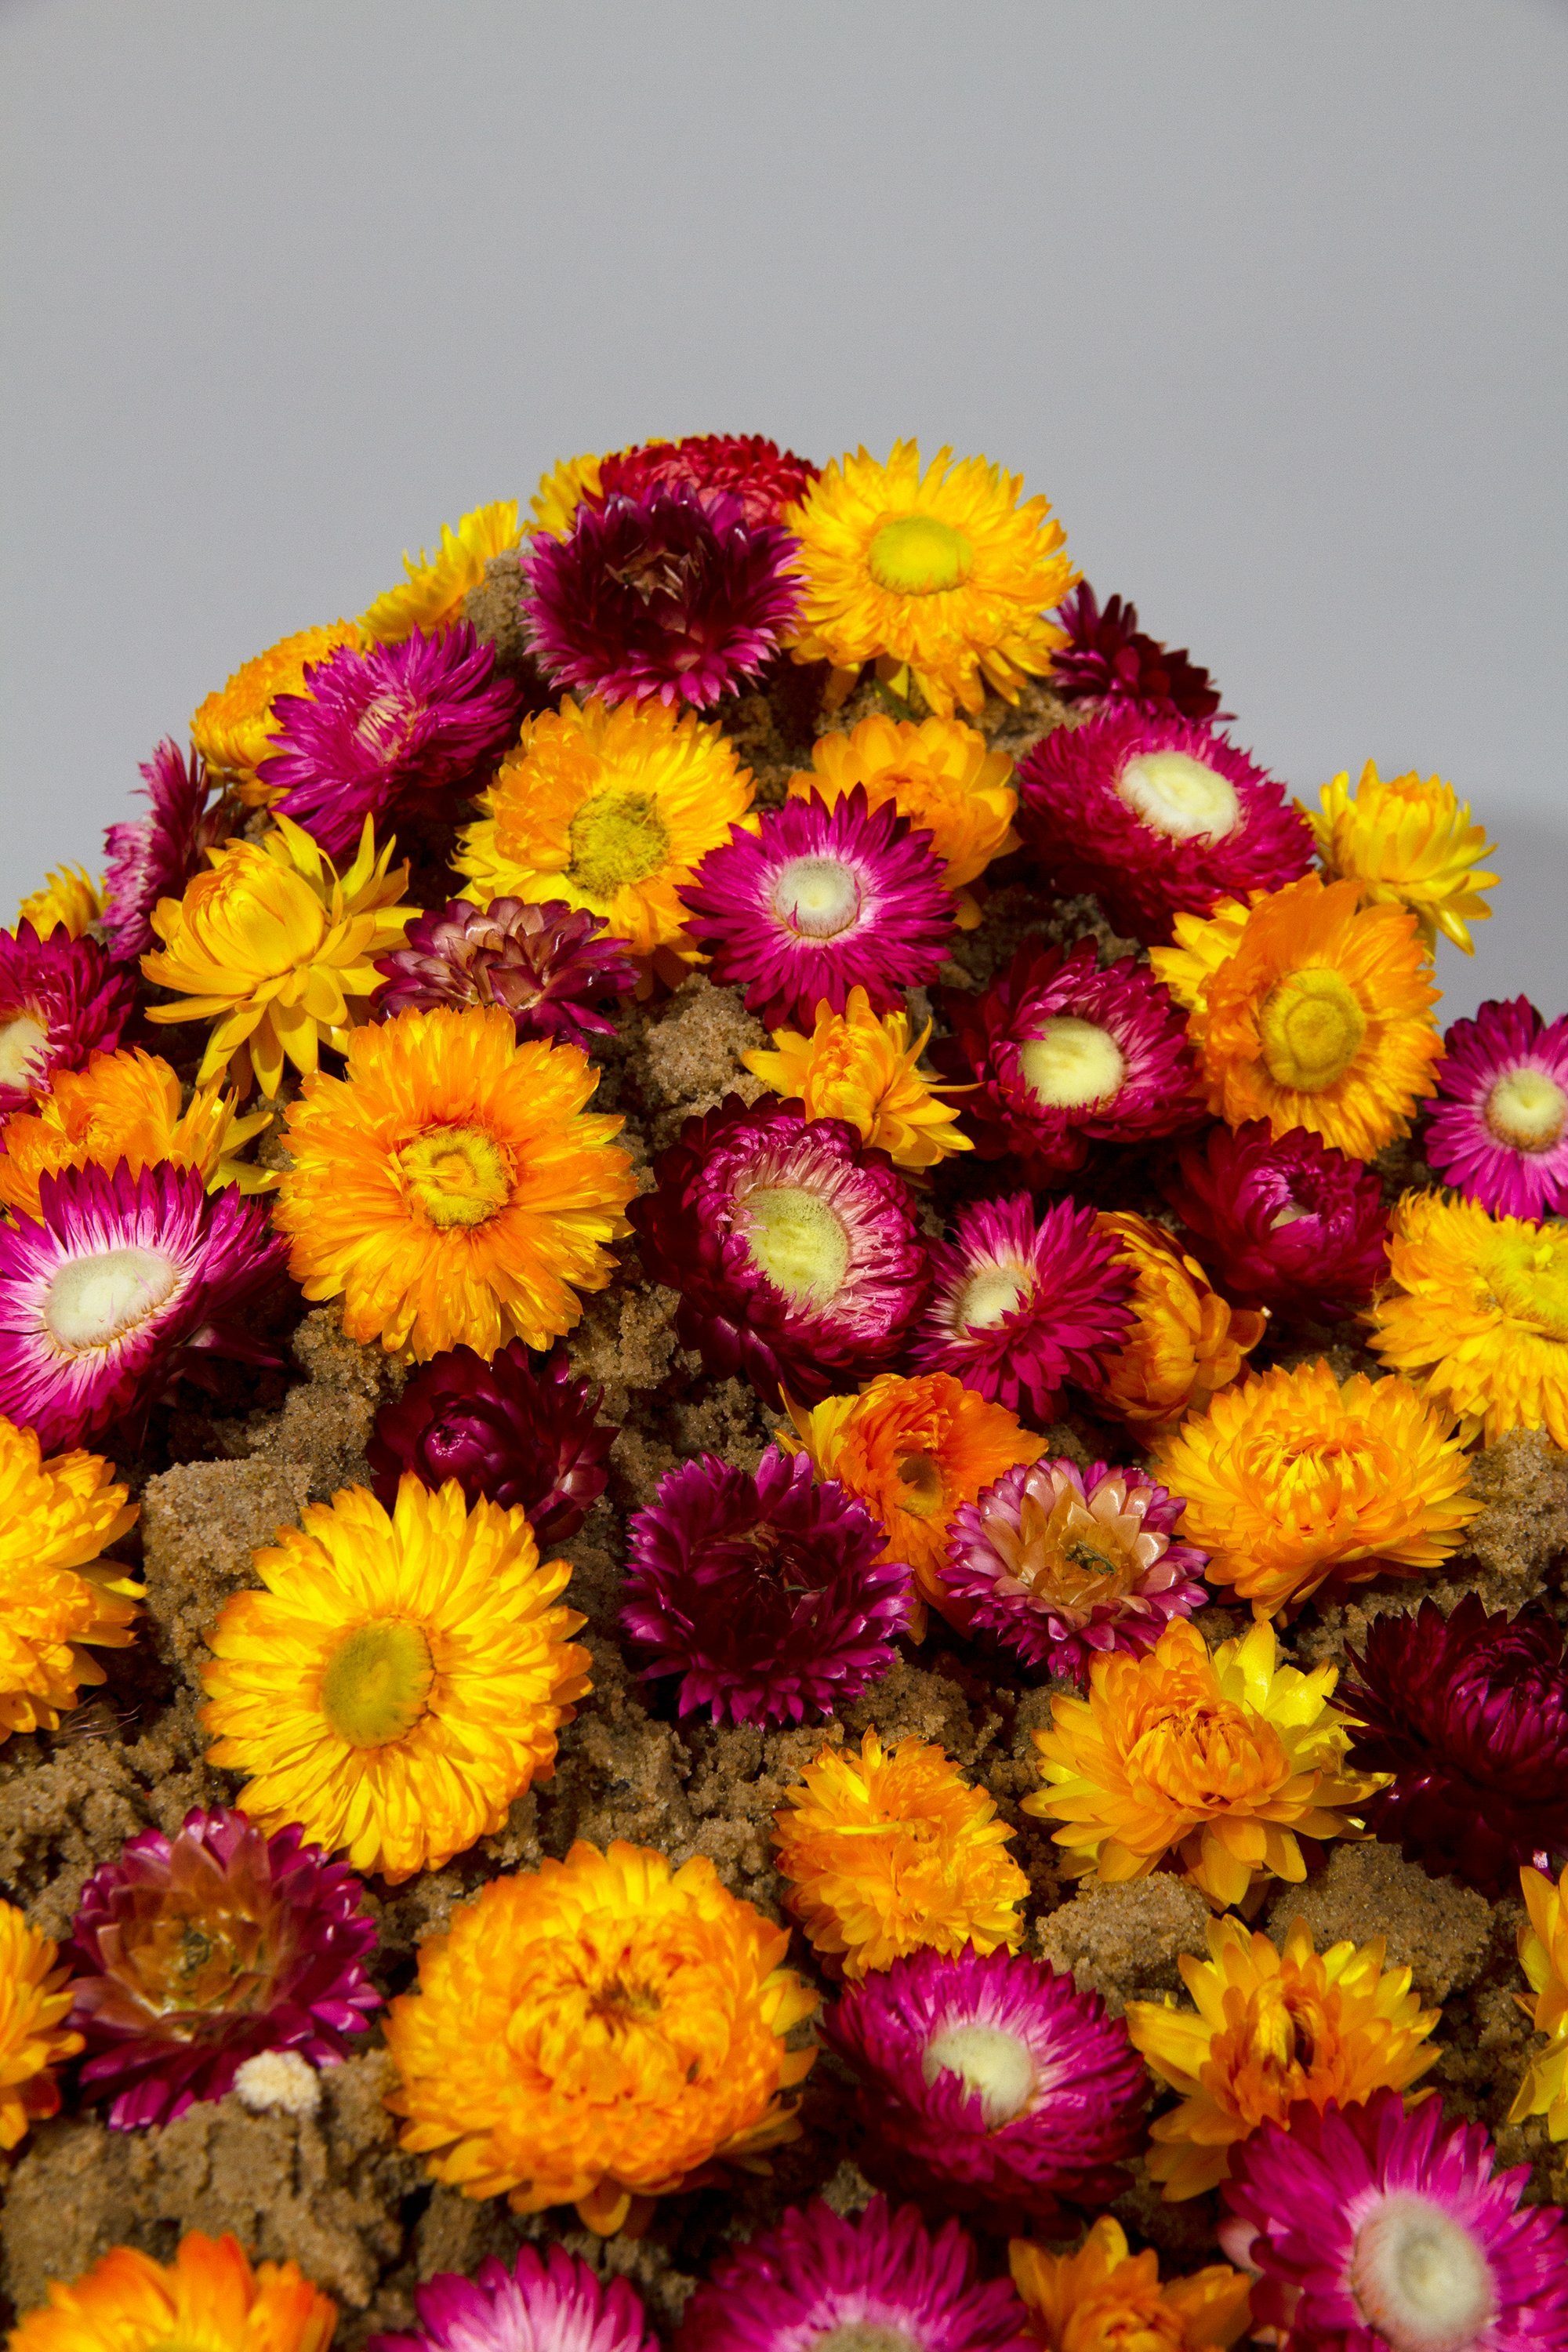 - sortiert getrocknet: gemischt Helichrysum Kunstharz.Art farblich Trockenblume oder Strohblumenköpfe Lila,